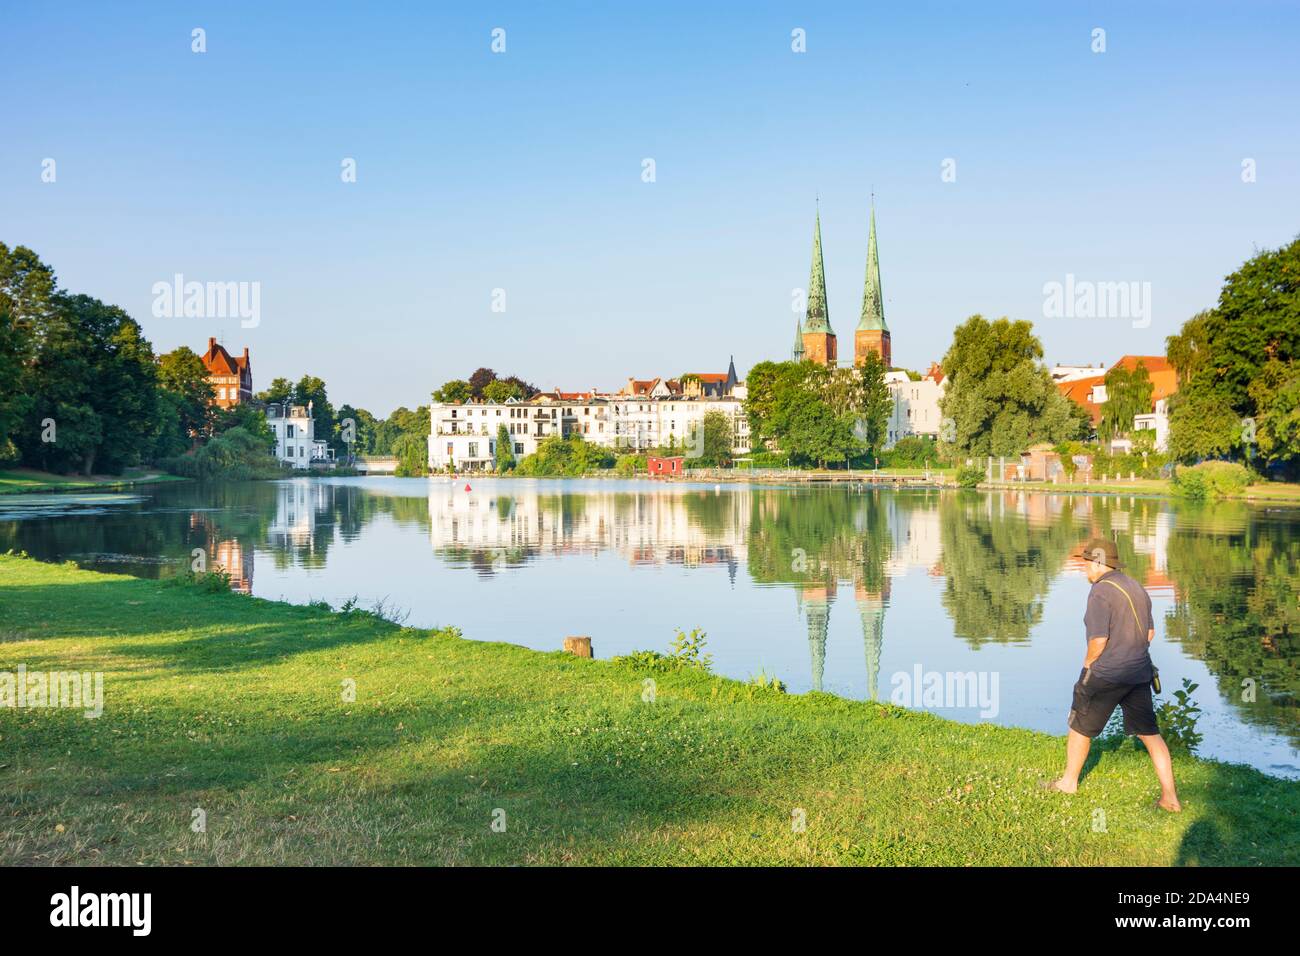 Lübeck: Catedral de Lübeck, estanque Krähenteich, Ostsee (Mar Báltico), Schleswig-Holstein, Alemania Foto de stock